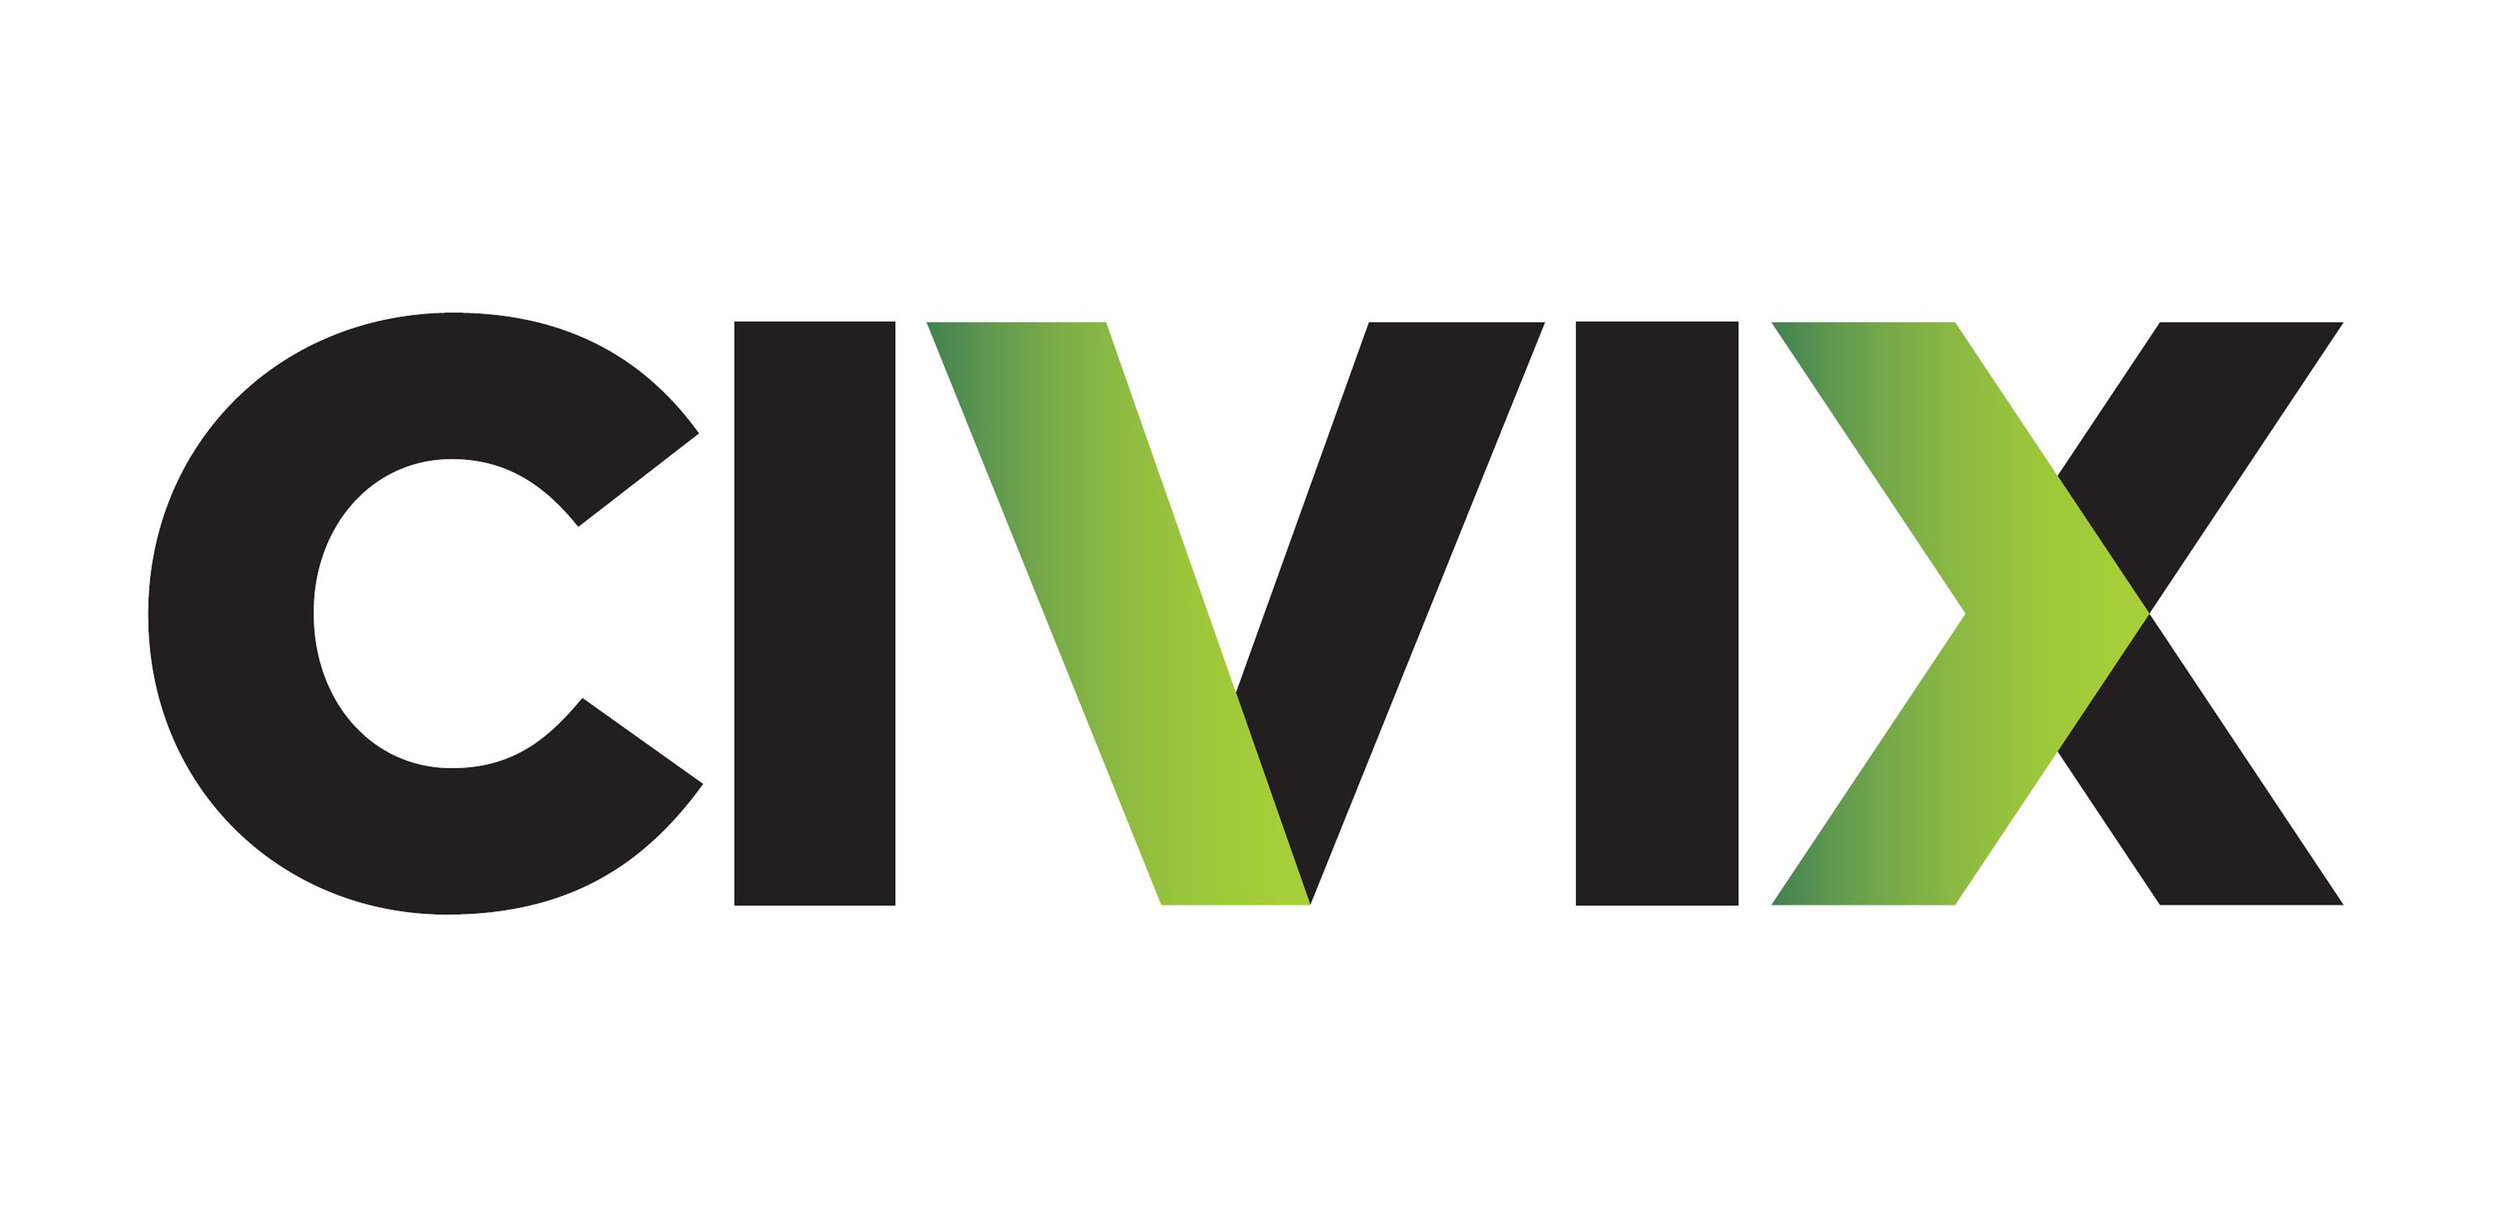 CIVIX.jpg